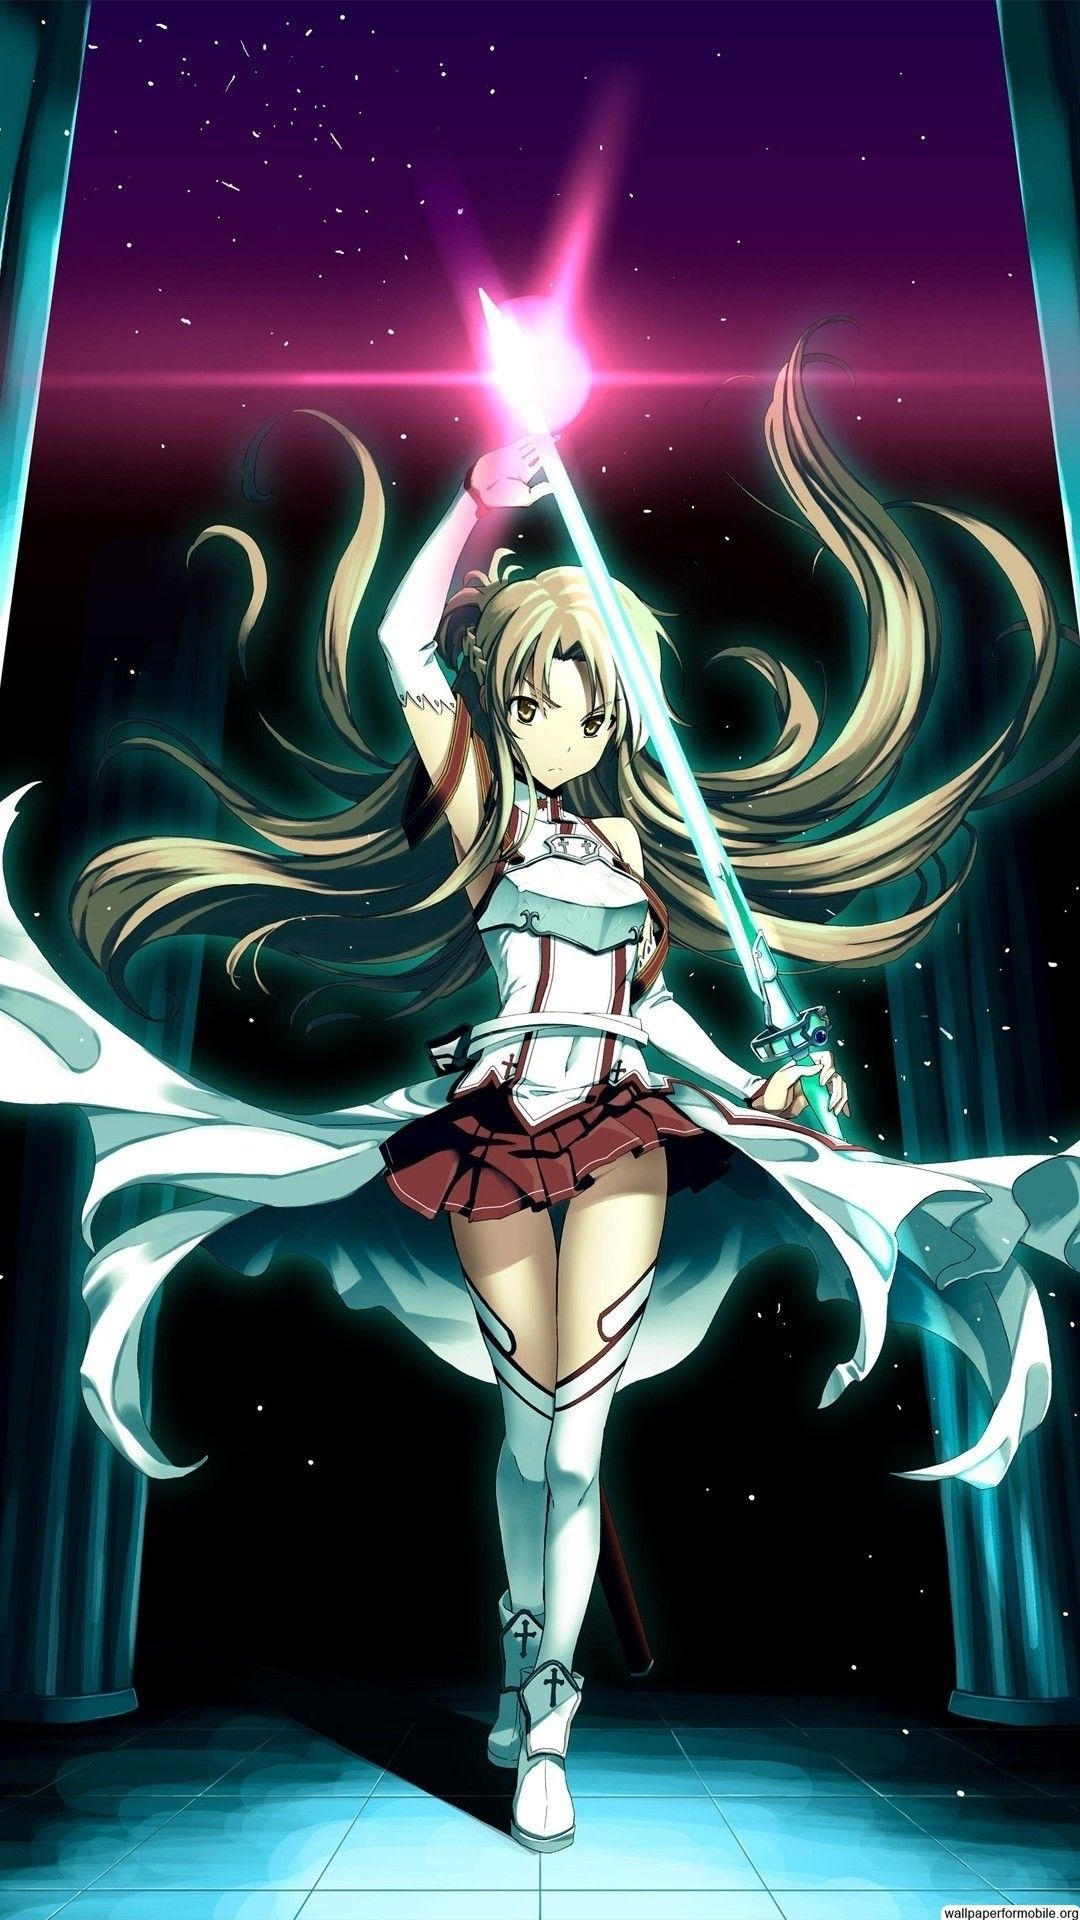 Download do APK de Anime Fan Art HD Wallpaper para Android